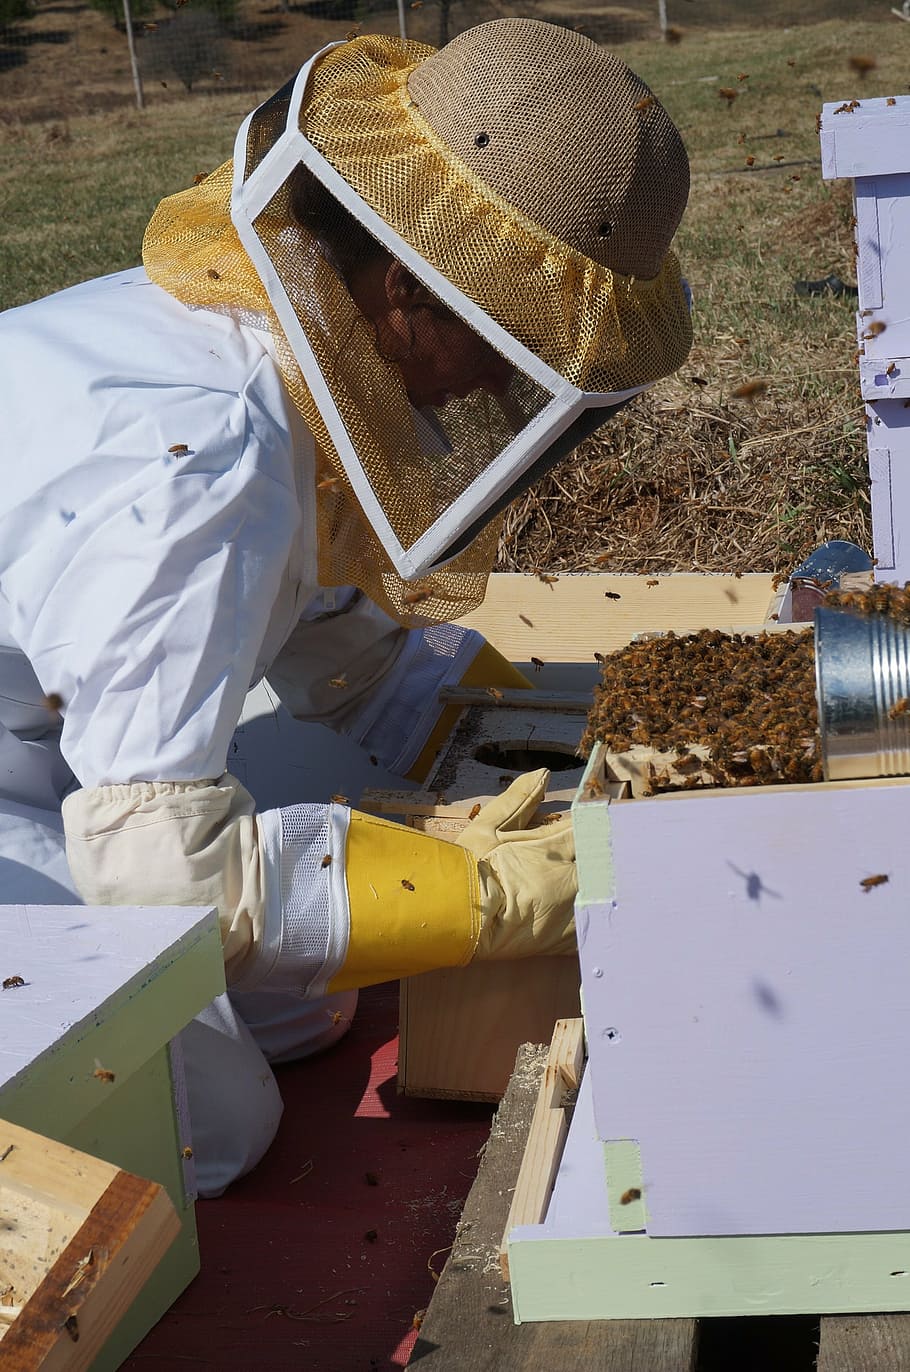 Persona, vistiendo, protector, traje, mirando, abejas, agricultura, apicultura, miel, colmena